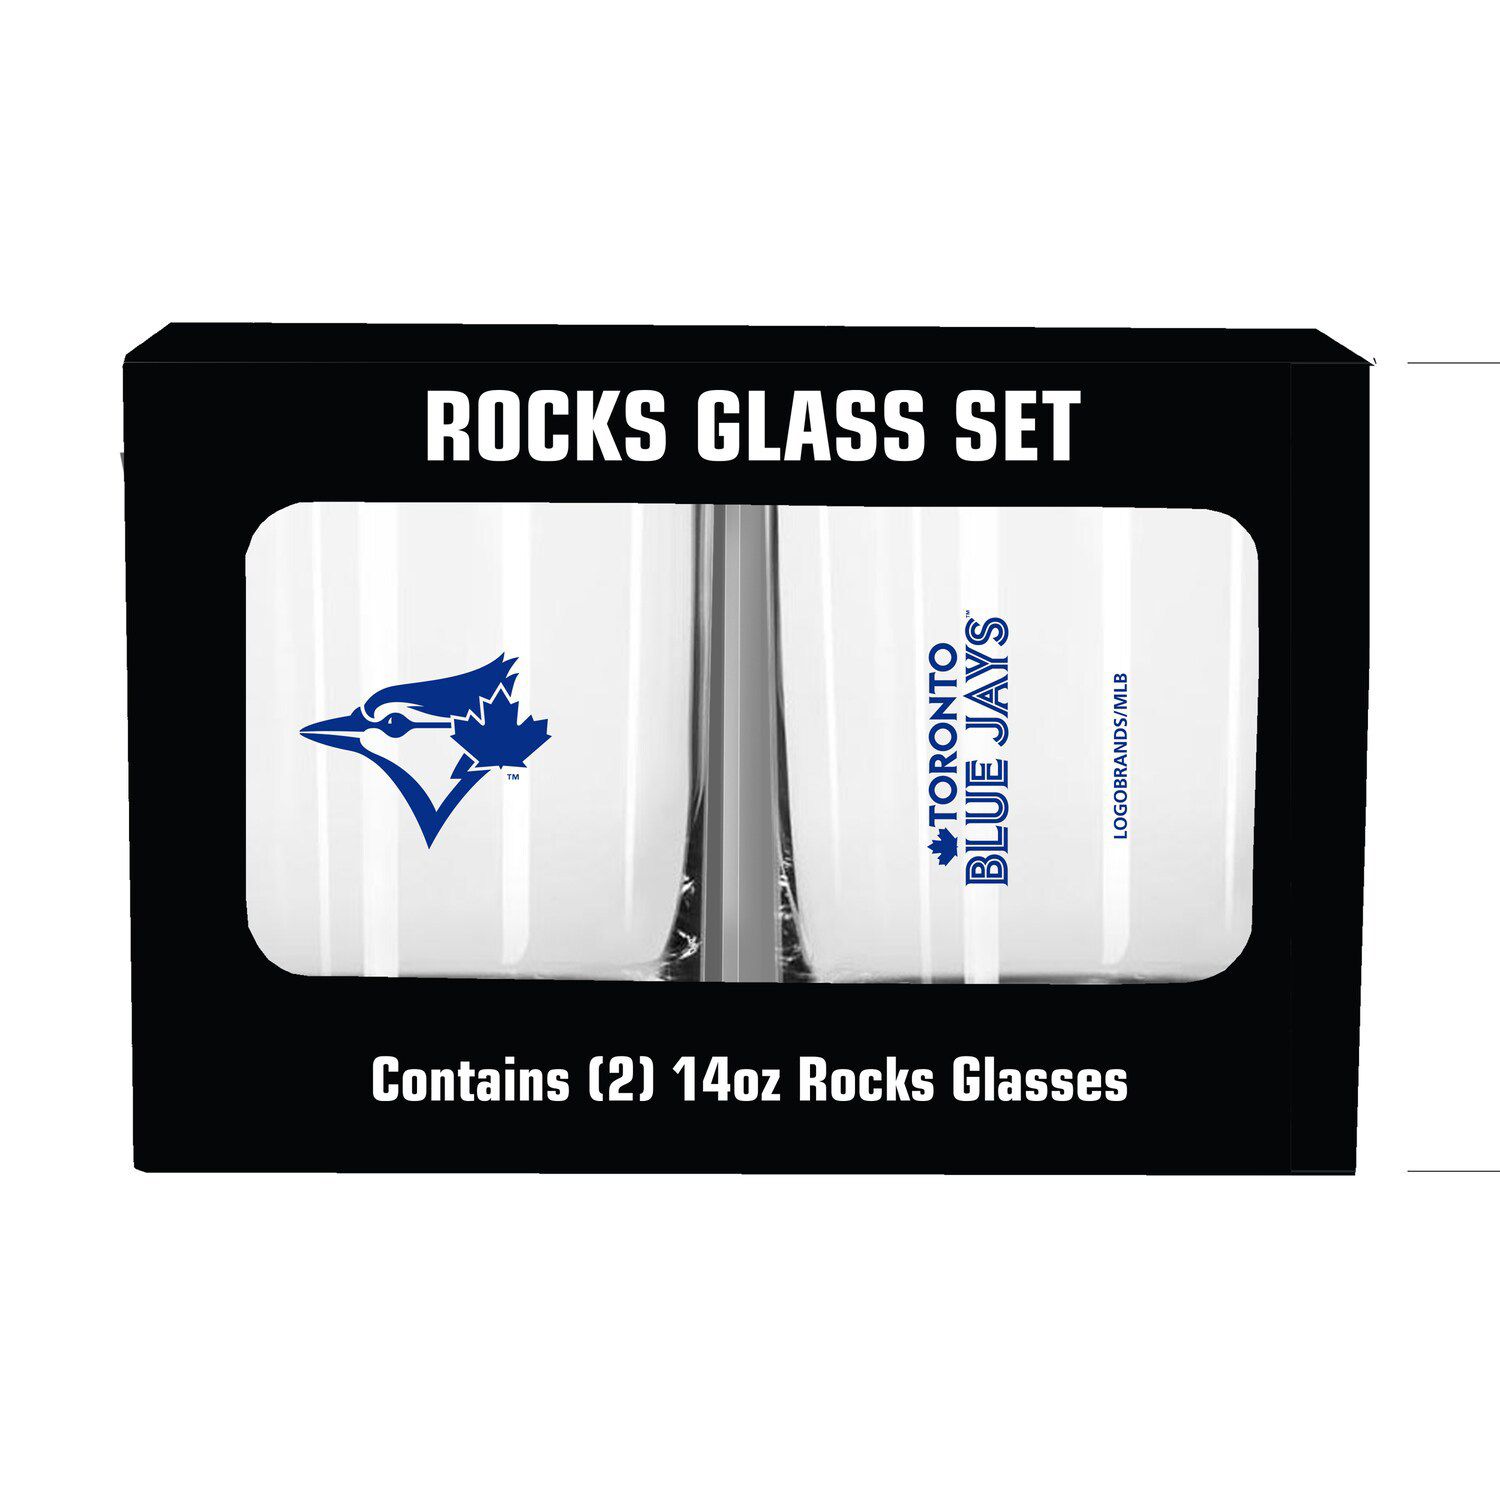 Image for Unbranded Toronto Blue Jays 14oz. Two-Pack Rocks Glass Set at Kohl's.